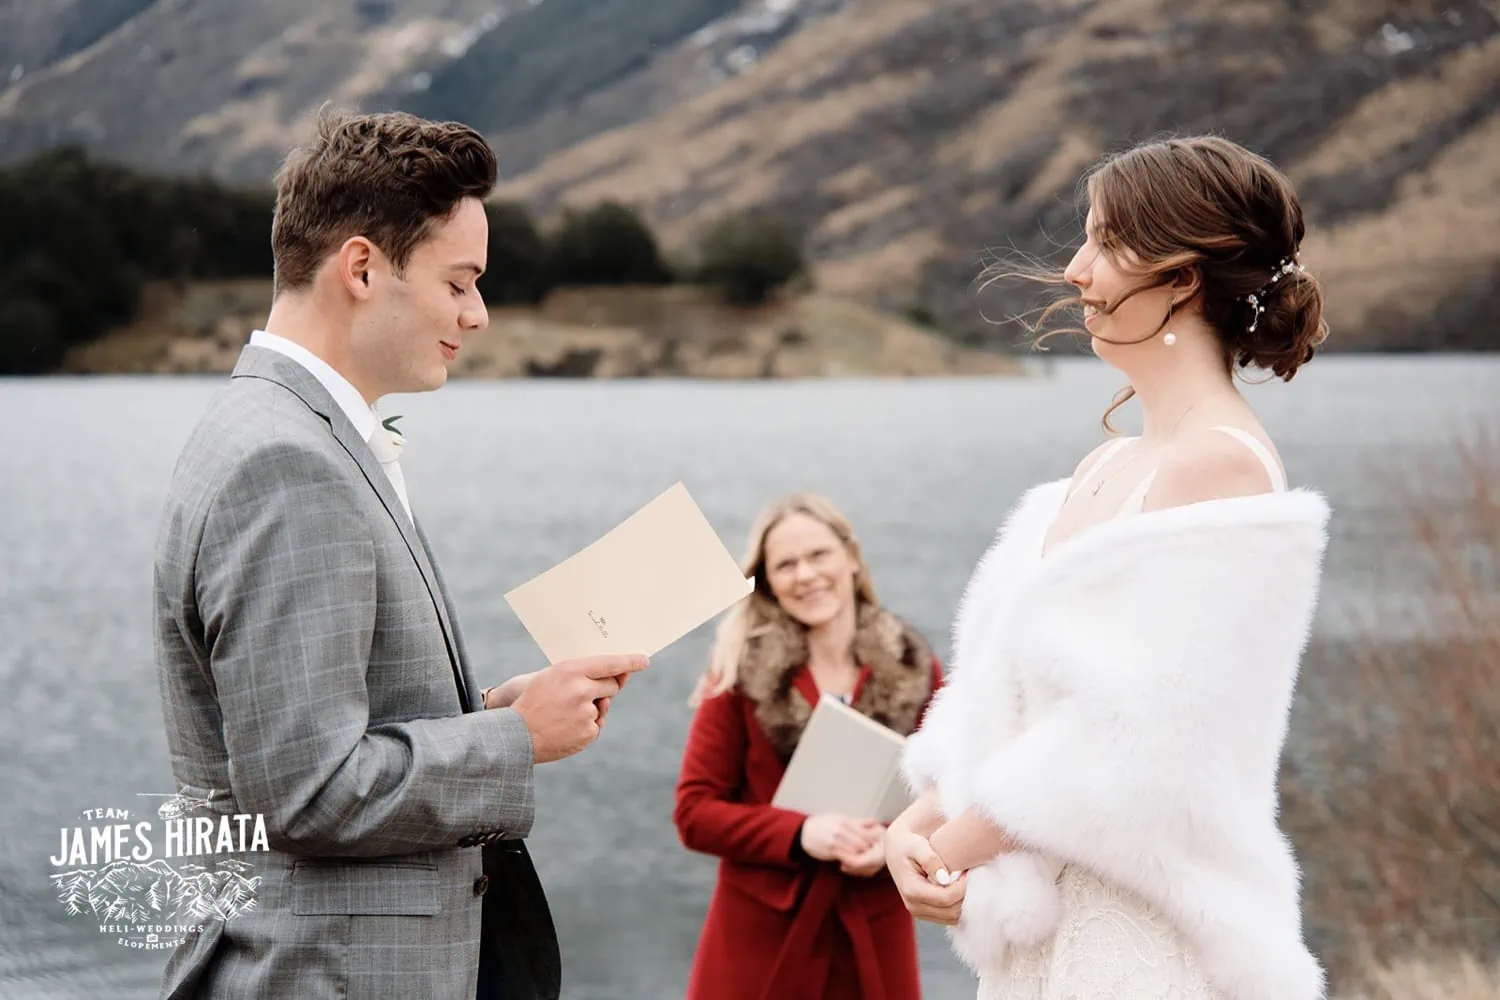 Regan & Jake exchange vows in front of a lake during their Queenstown elopement wedding.